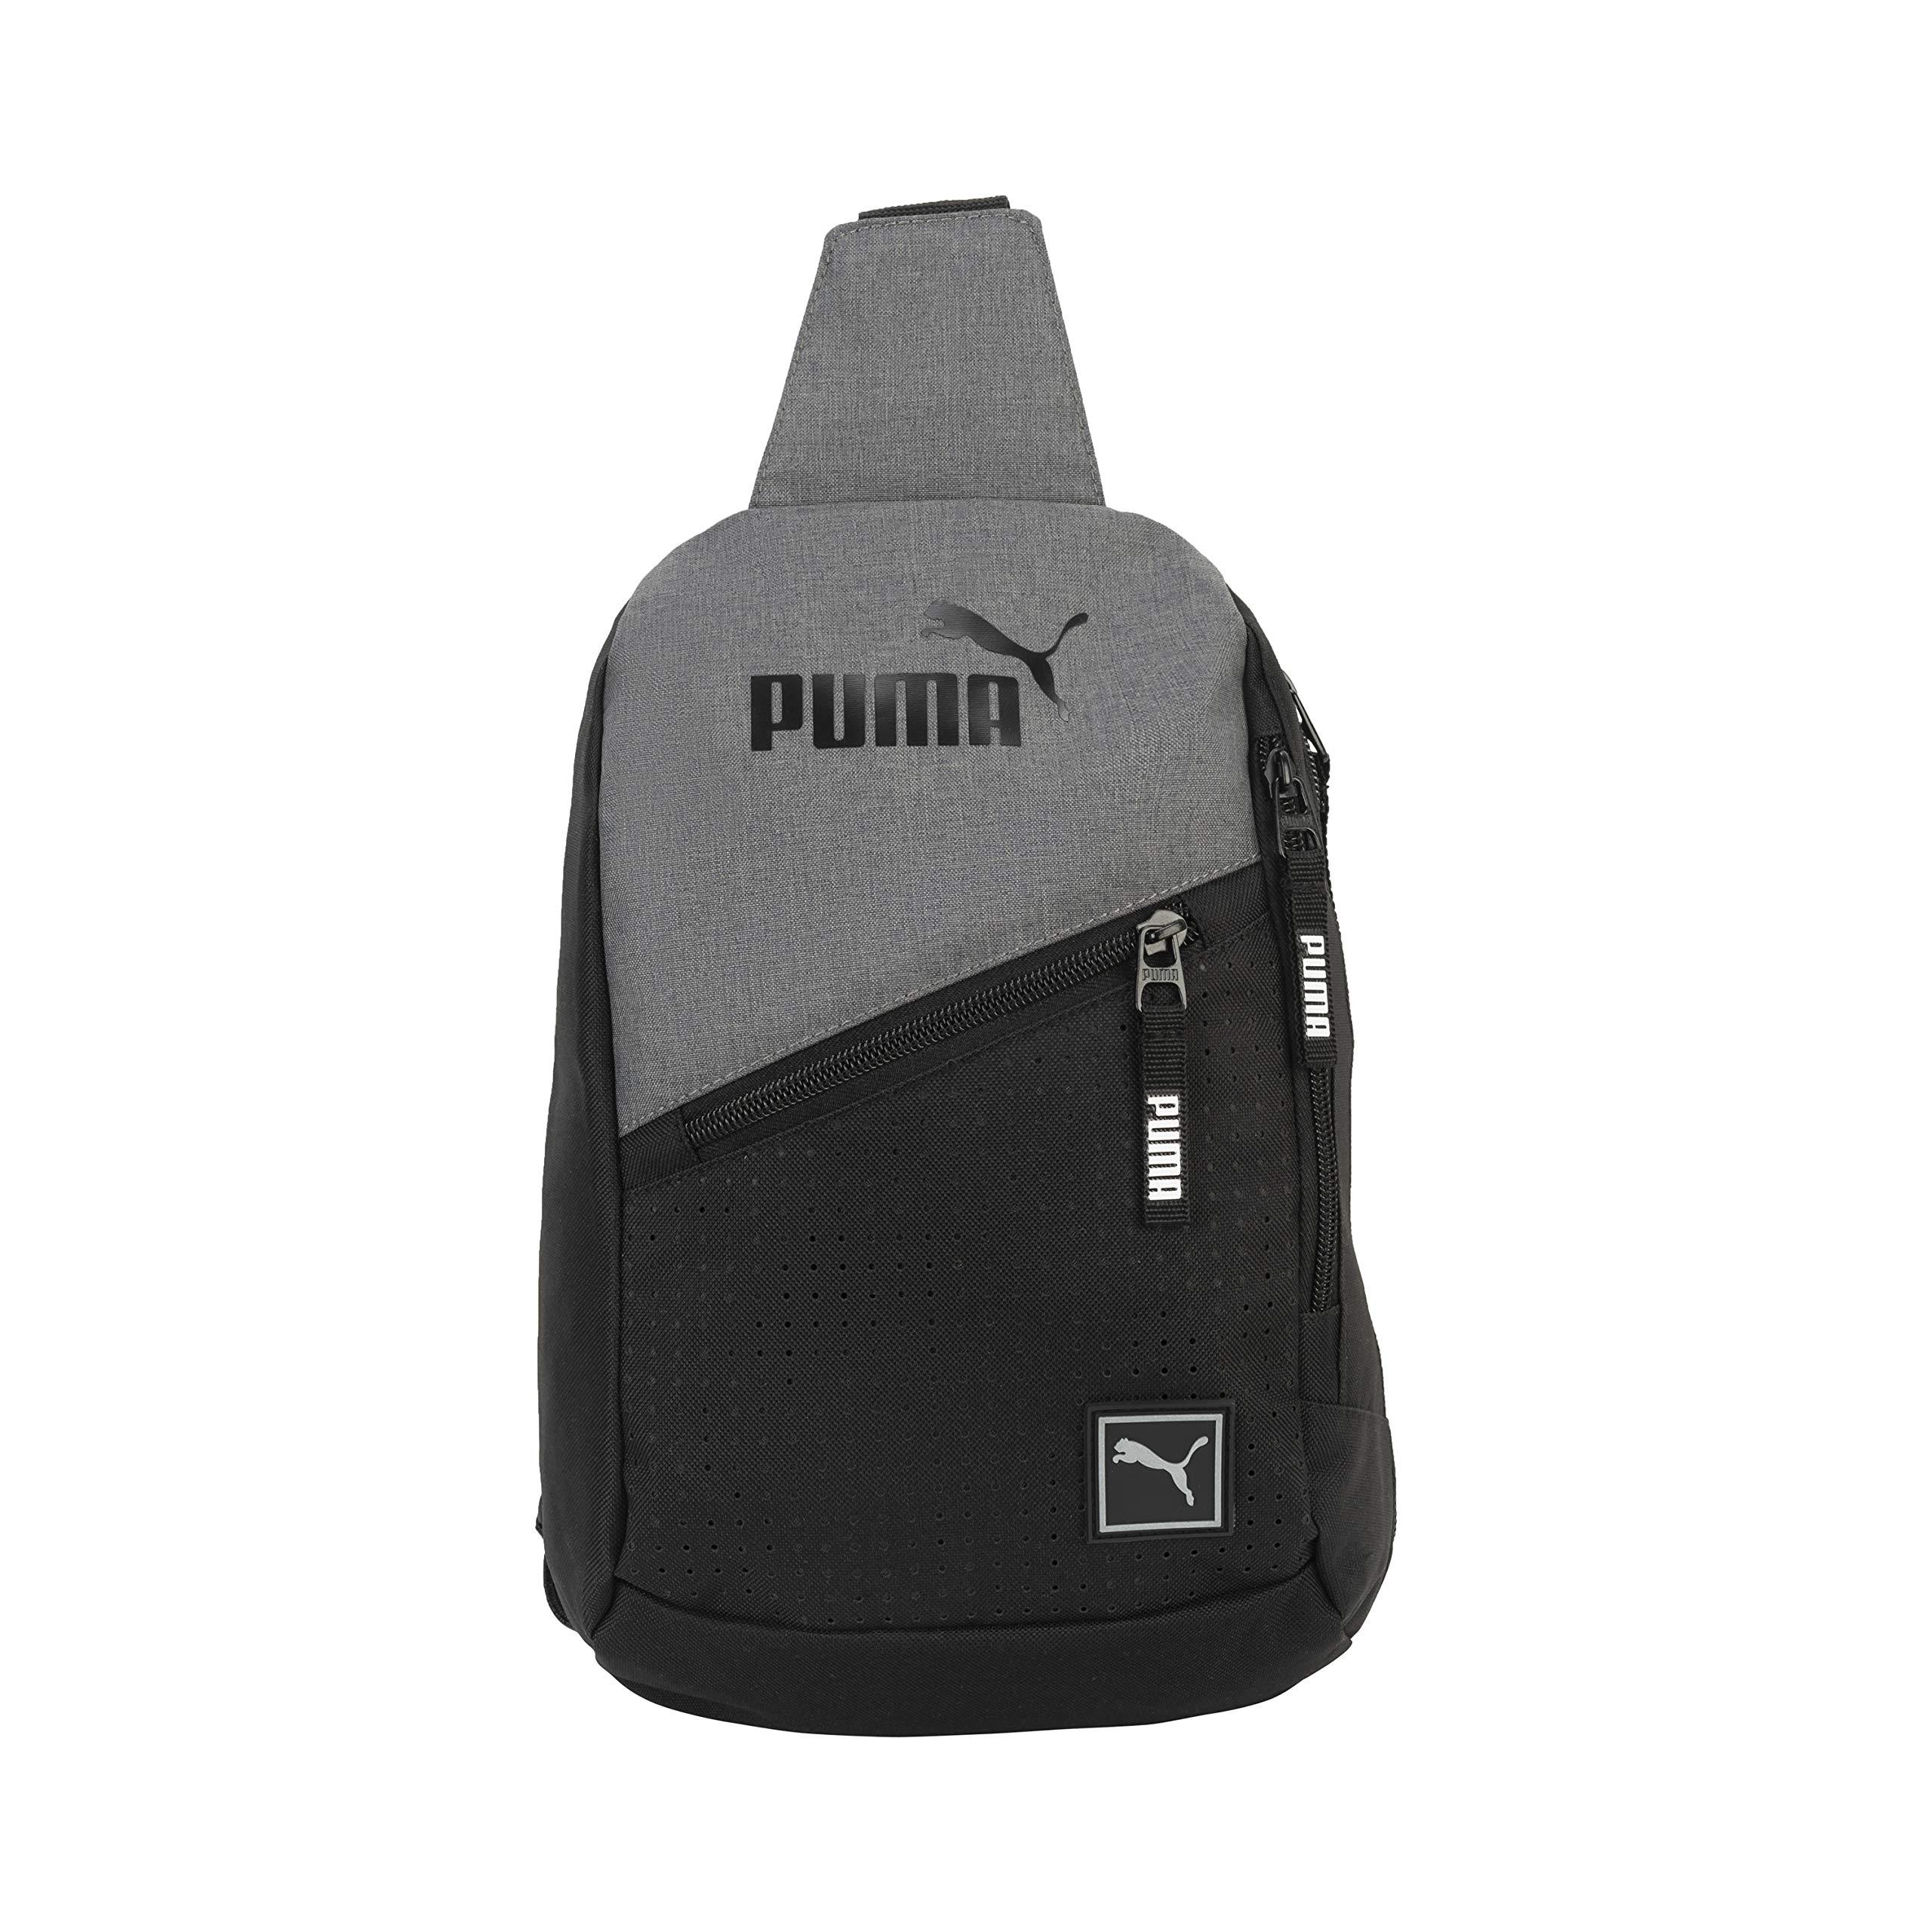 PUMA Unisex Adult No 1 Logo Sidewall Sling Backpack in Heather Grey (Gray)  - Save 47% - Lyst